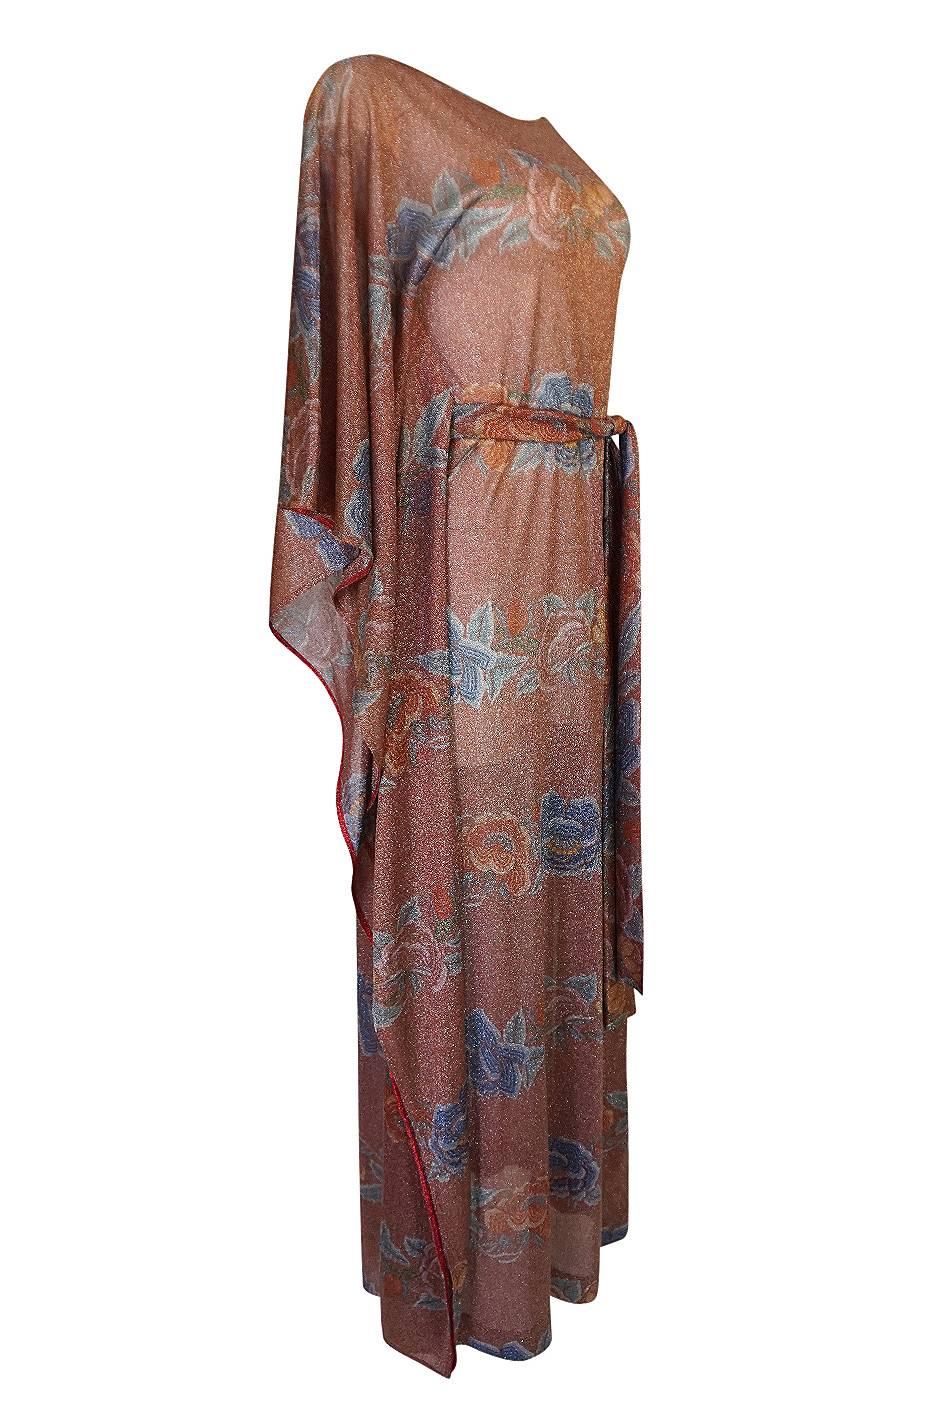 Brown Missoni Floral Print Metallic Lurex Caftan Dress, circa 1972-73 